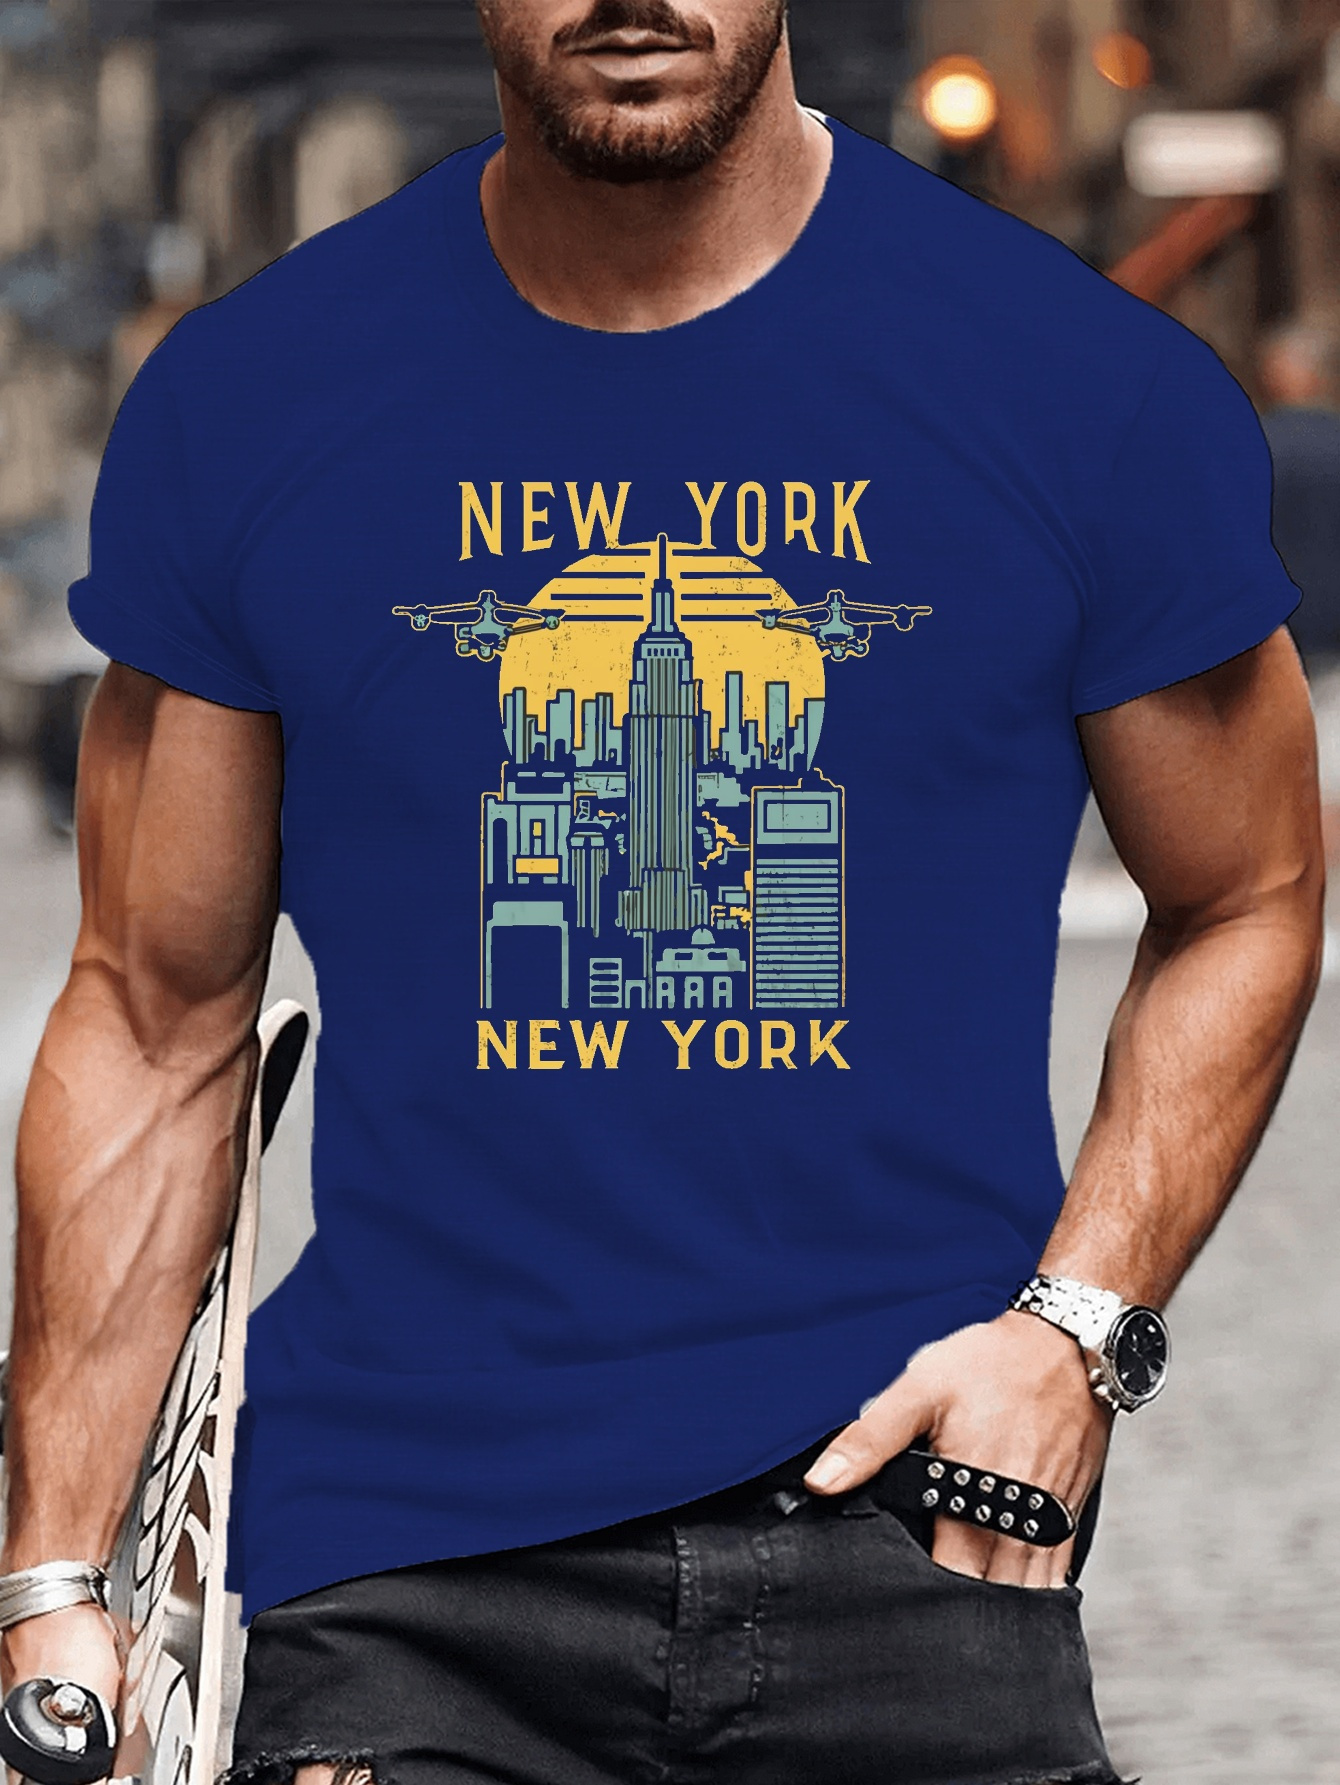 New York City Print Tee Shirt, Tees For Men, Casual Short Sleeve T ...